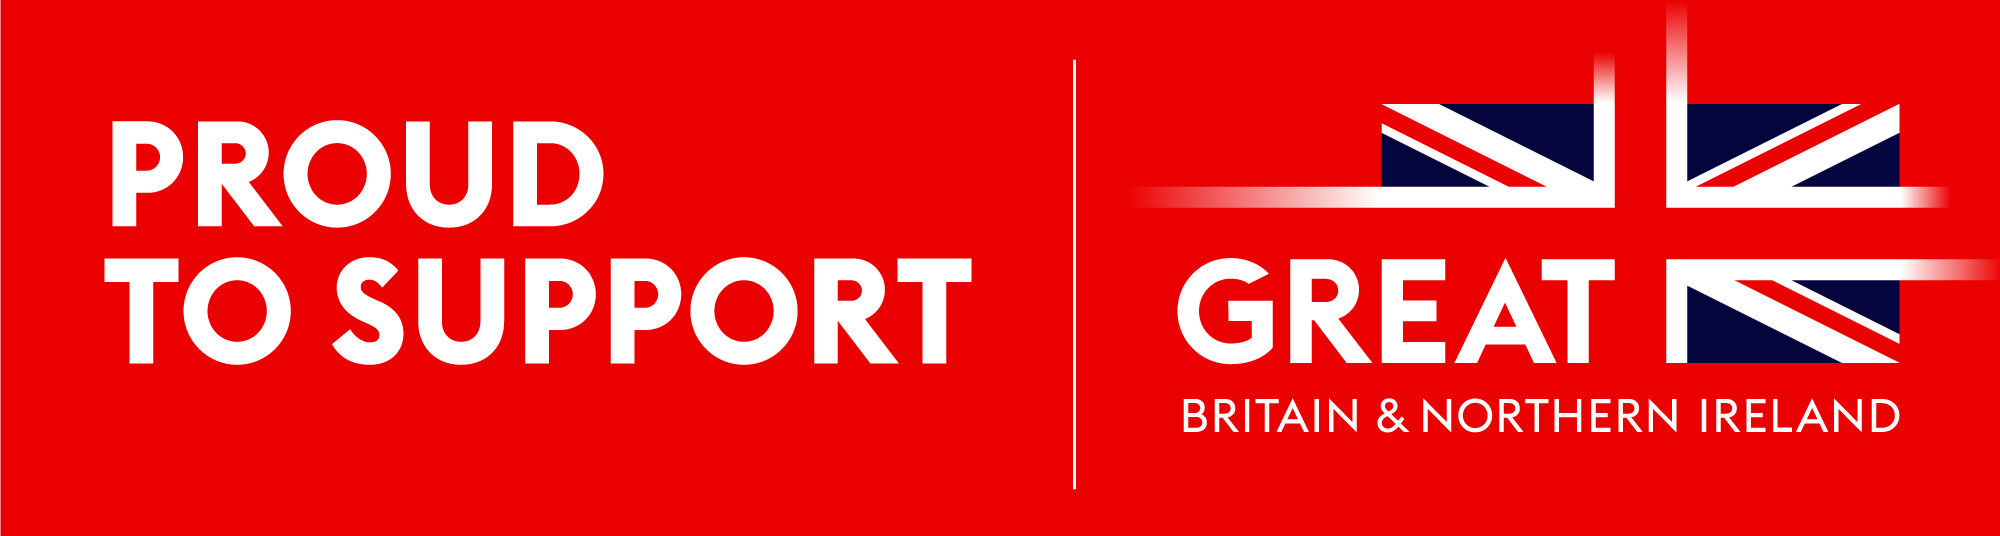 Proud to support Great Britain & Northen Ireland logo